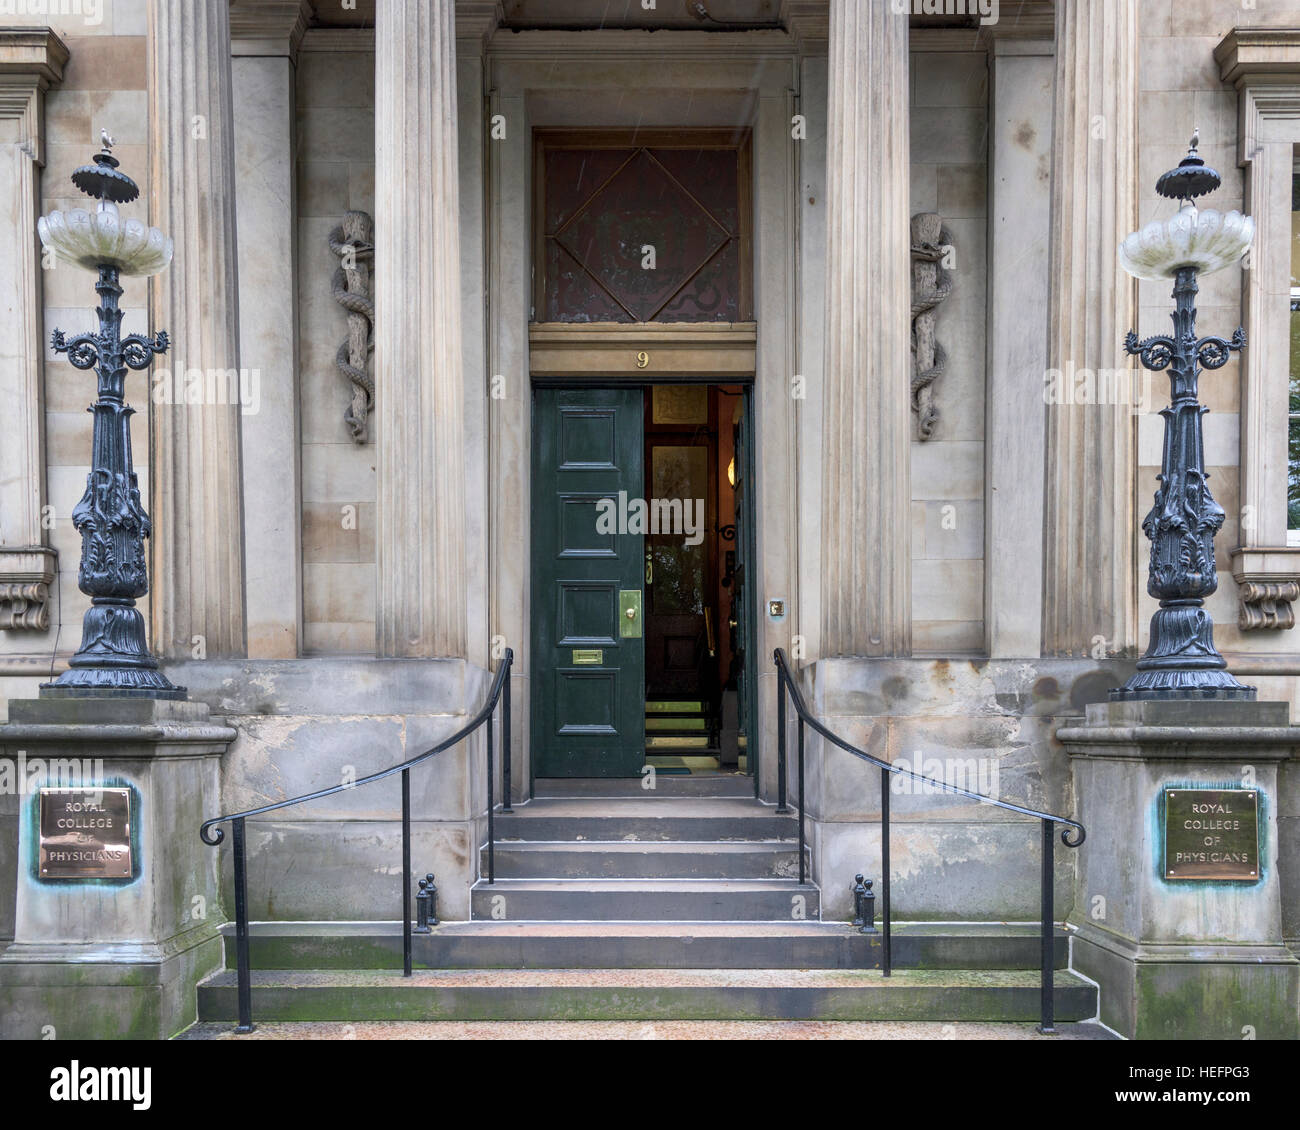 Royal College of Physicians of Edinburgh, Queen Street, Edinburgh, Scotland Stock Photo